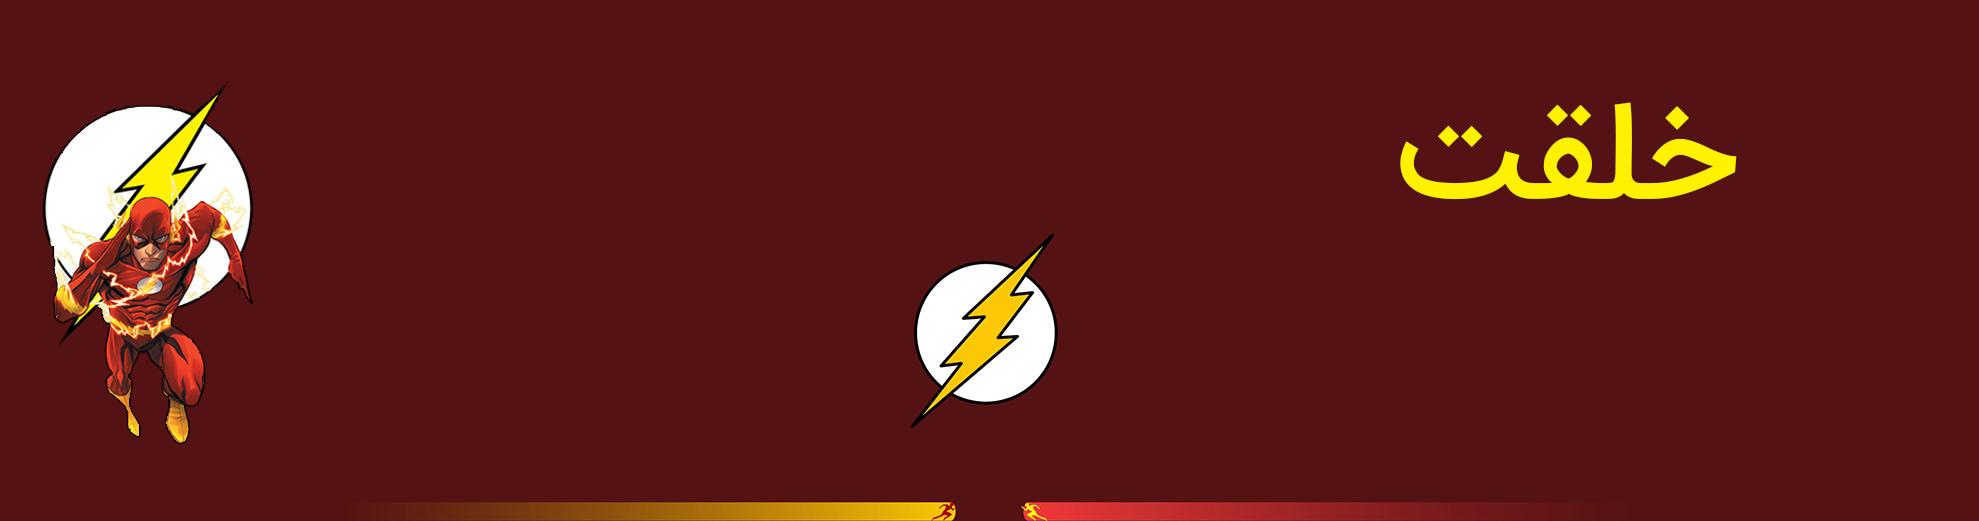 بری آلن - فلش - دی سی کامیکس - the flash - barry allen - dc comics